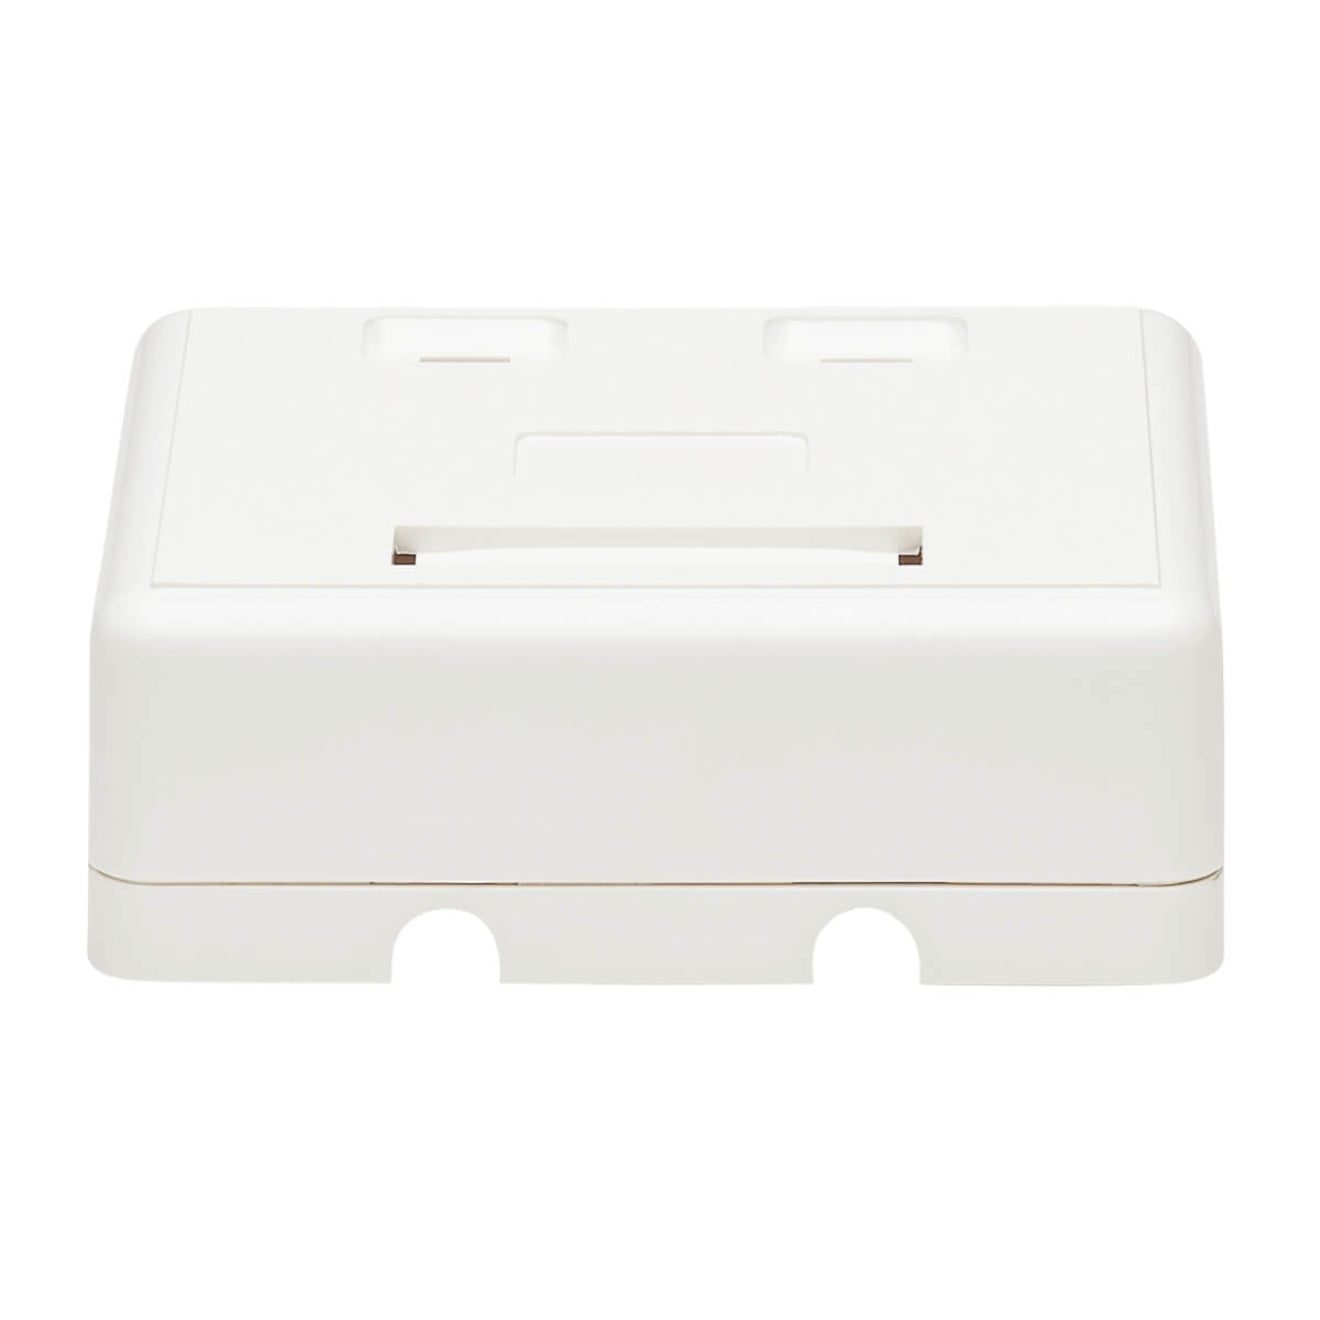 Tripp Lite N082-002-WH Surface-Mount Box for Keystone Jacks - 2 Ports, White, TAA Compliant